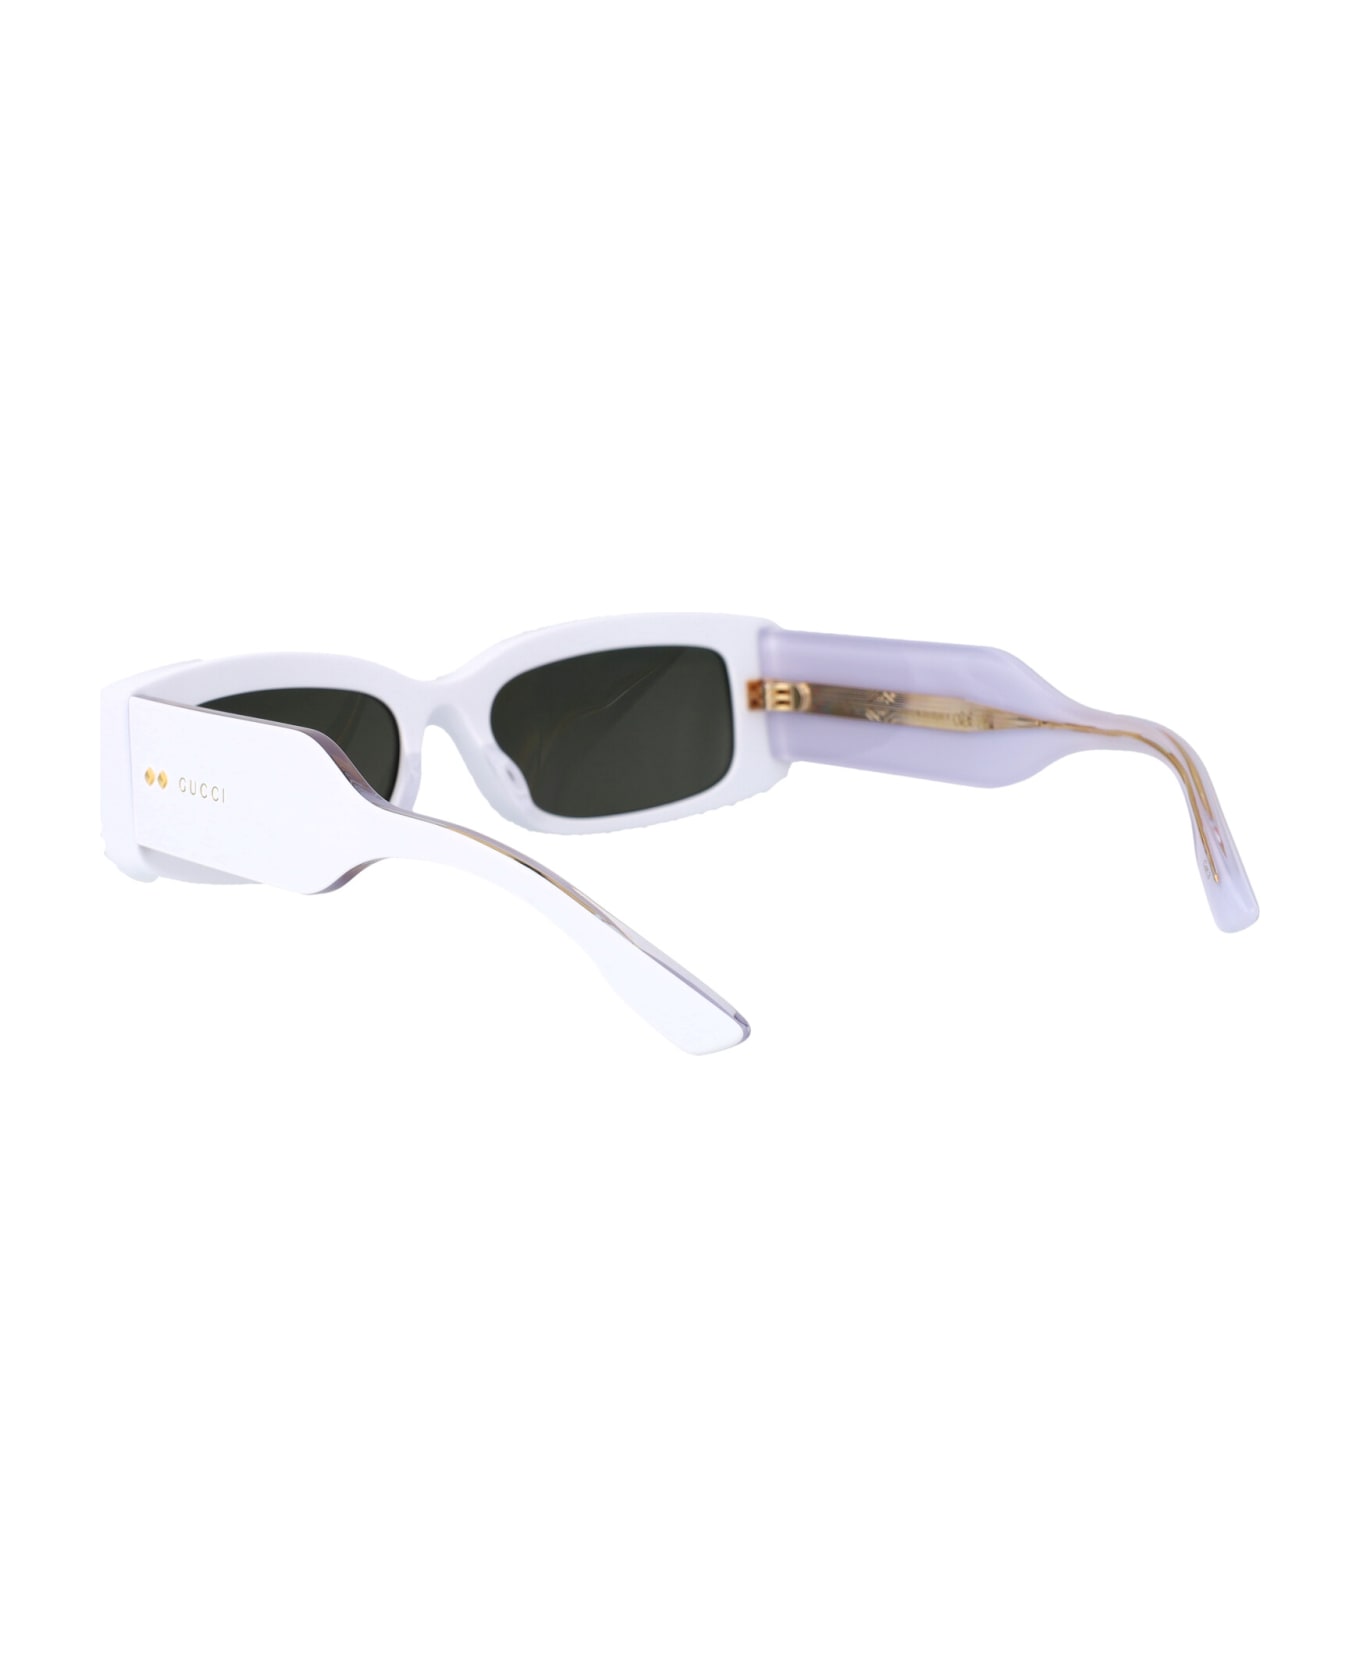 Gucci Eyewear Gg1528s Sunglasses - 004 LIGHT BLUE LIGHT BLUE GREY サングラス